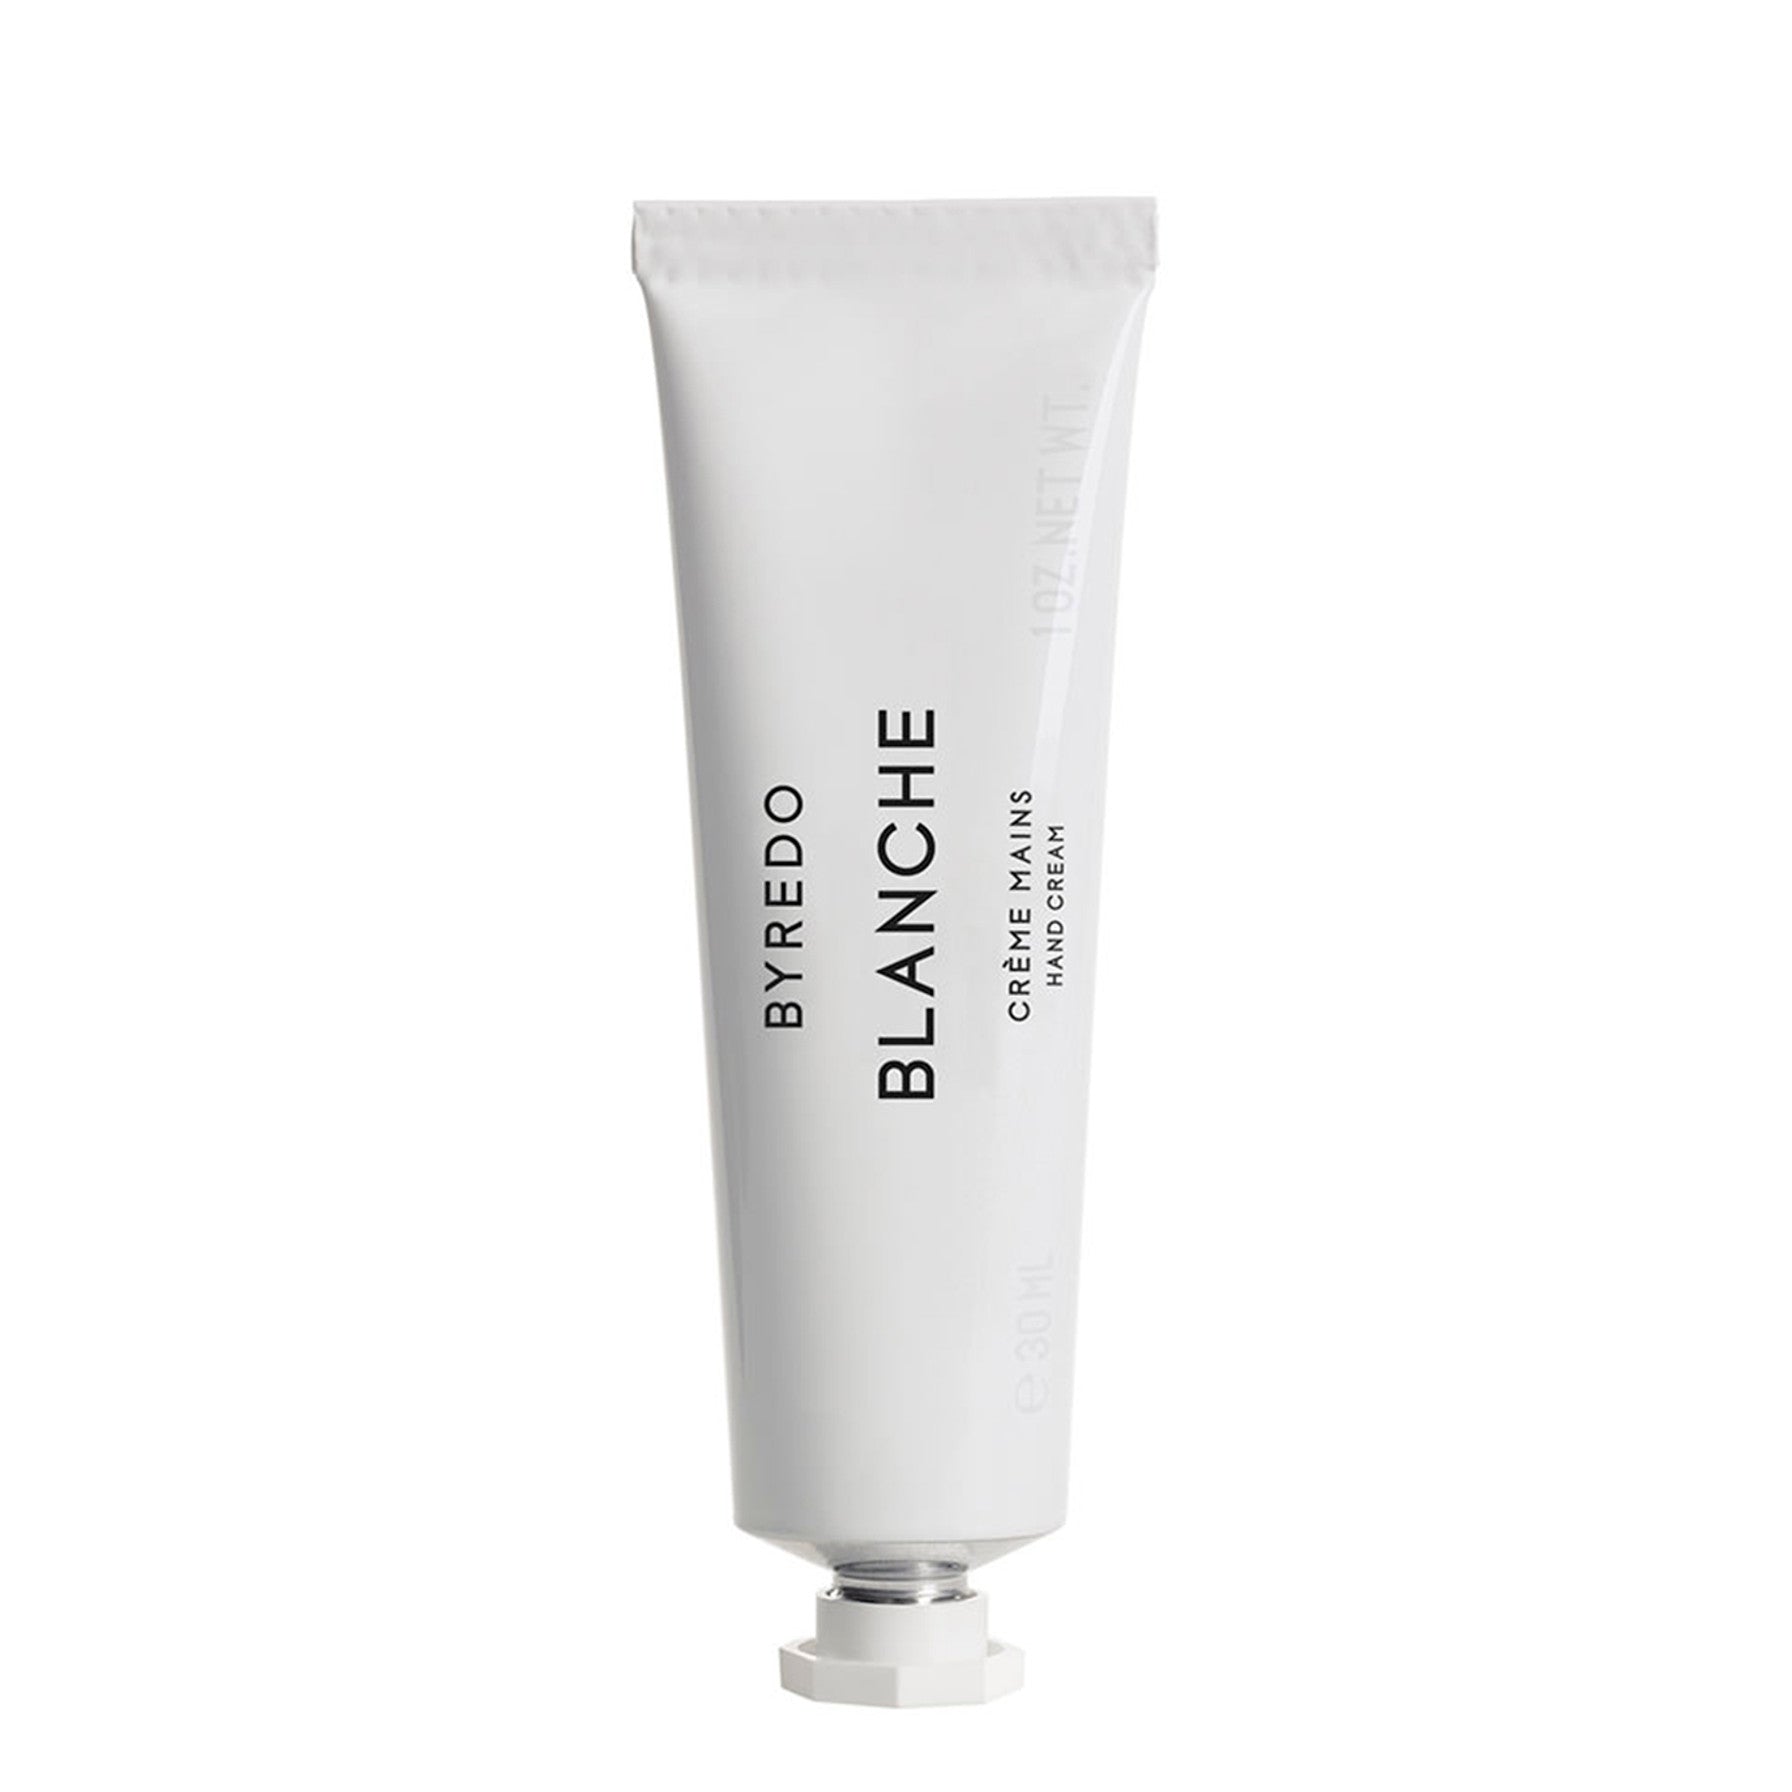 Byredo - “Blanche” Hand Cream 30ml view 1